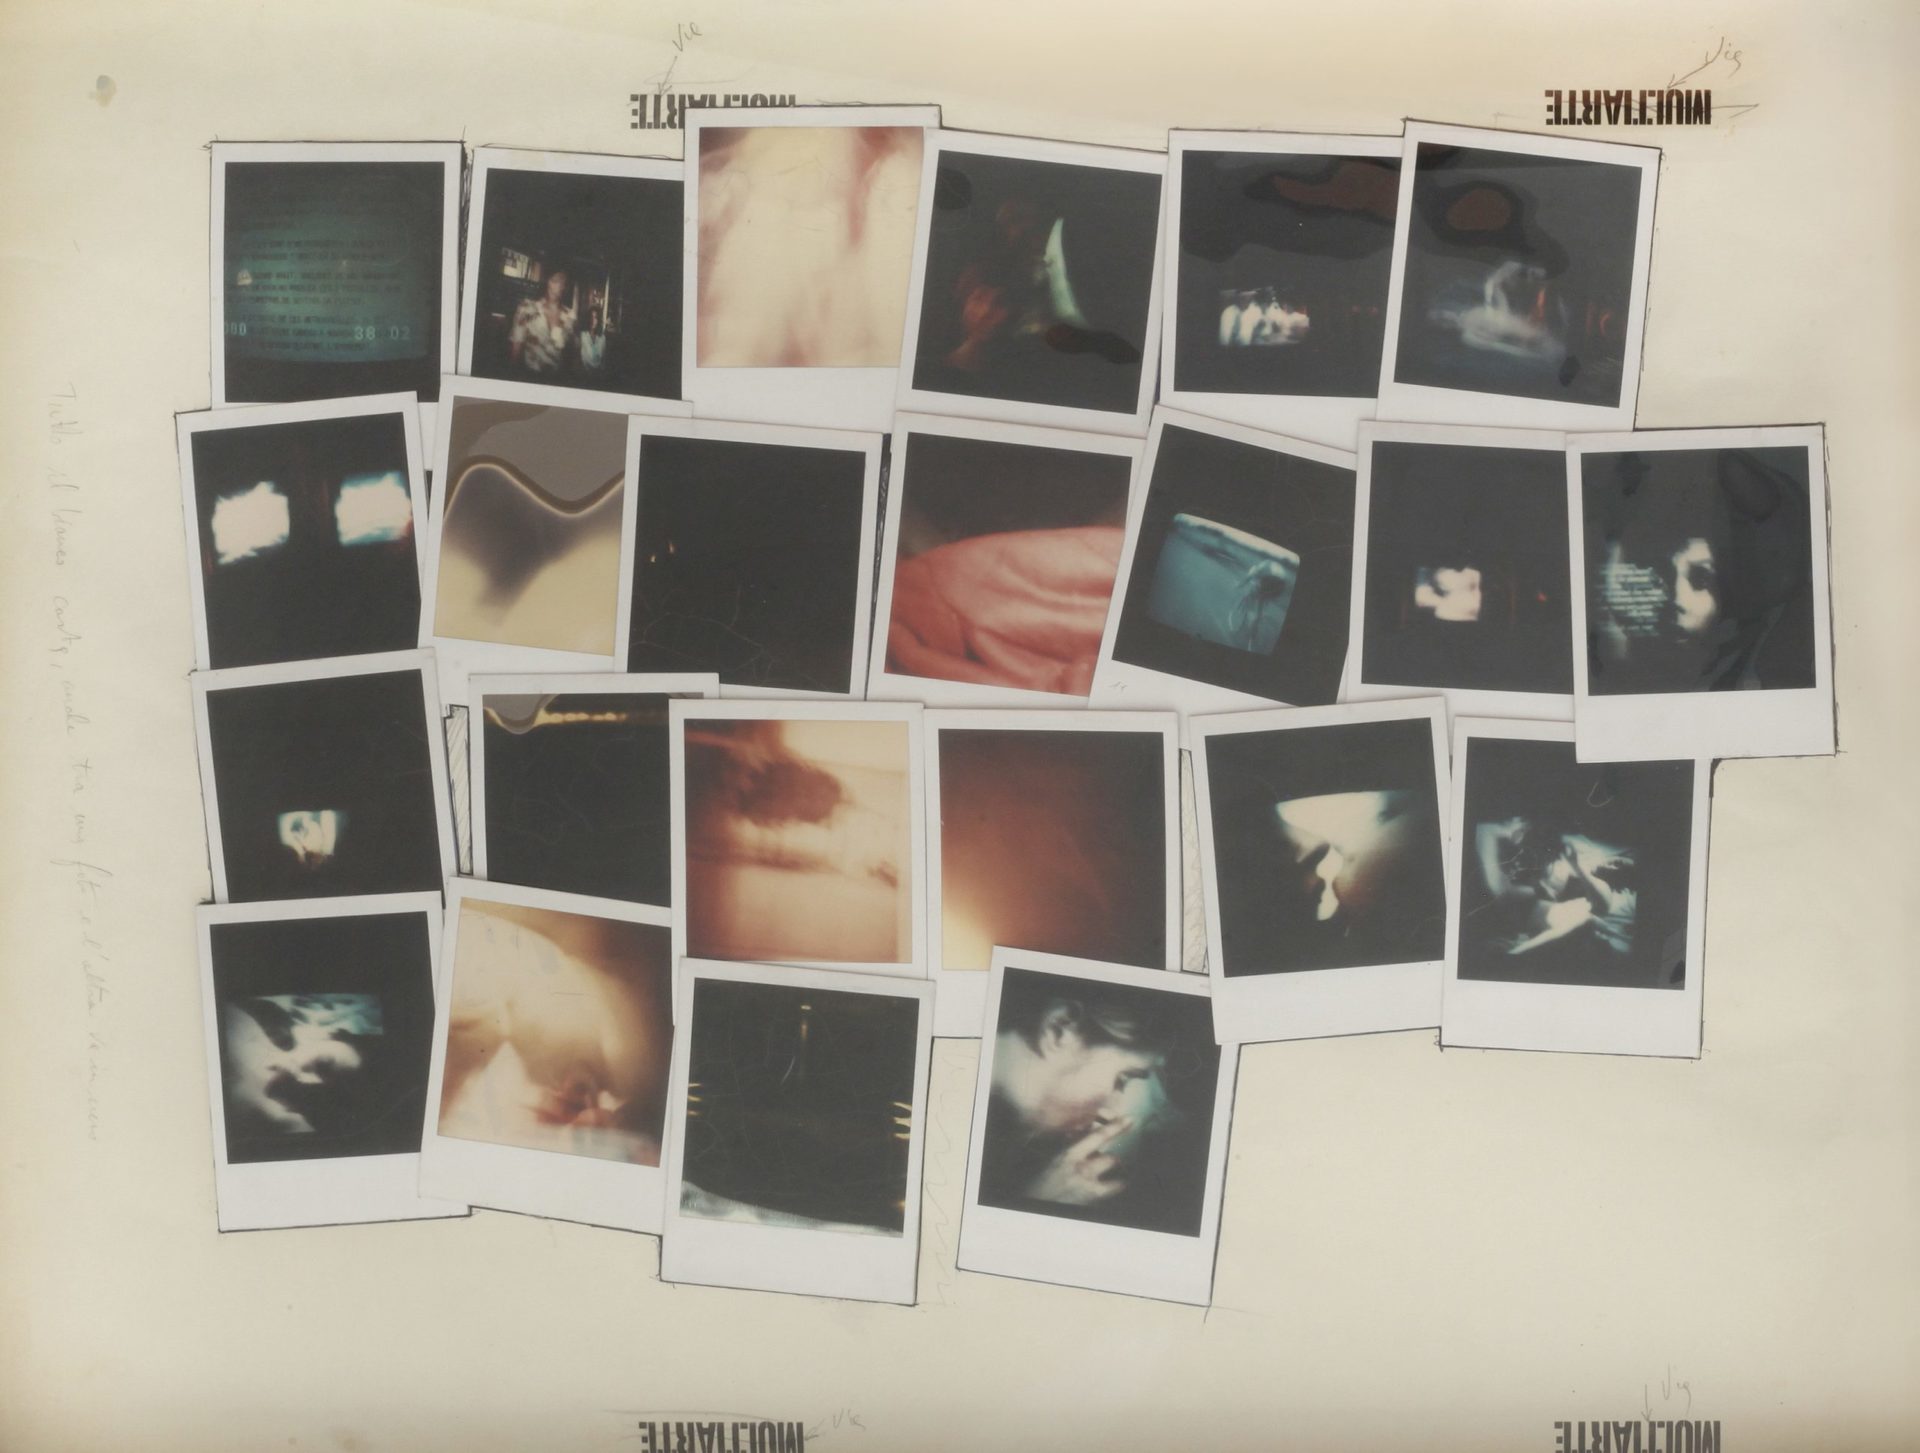 Mario Schifano Senza titolo Polaroids 1973 74 23 polaroids su cartoncino cm. 53 x 73 scaled - Milano Photofestival